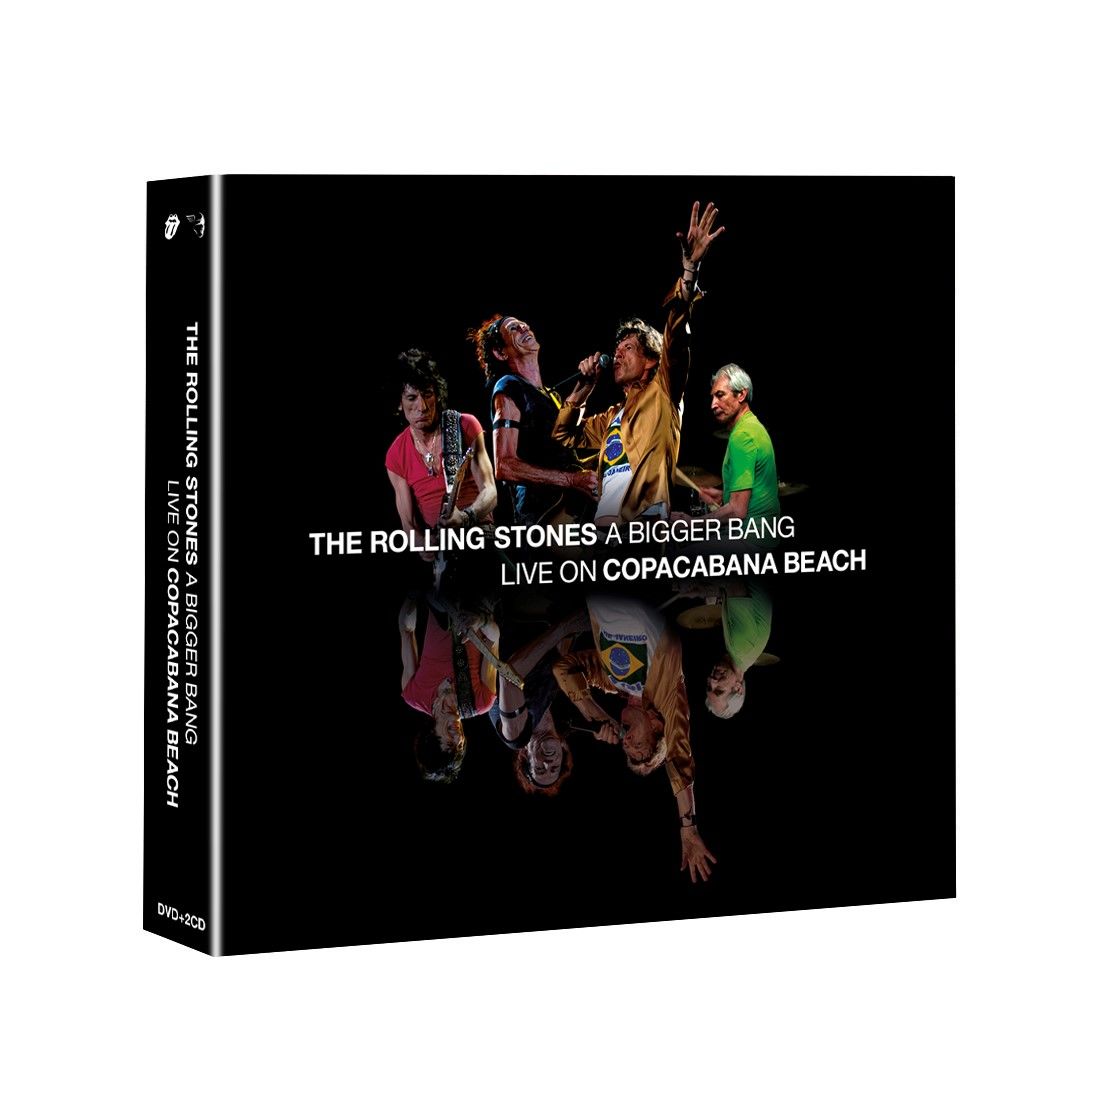 The Rolling Stones - ‘A Bigger Bang’ Live On Copacabana Beach: SD DVD 4-disc Set